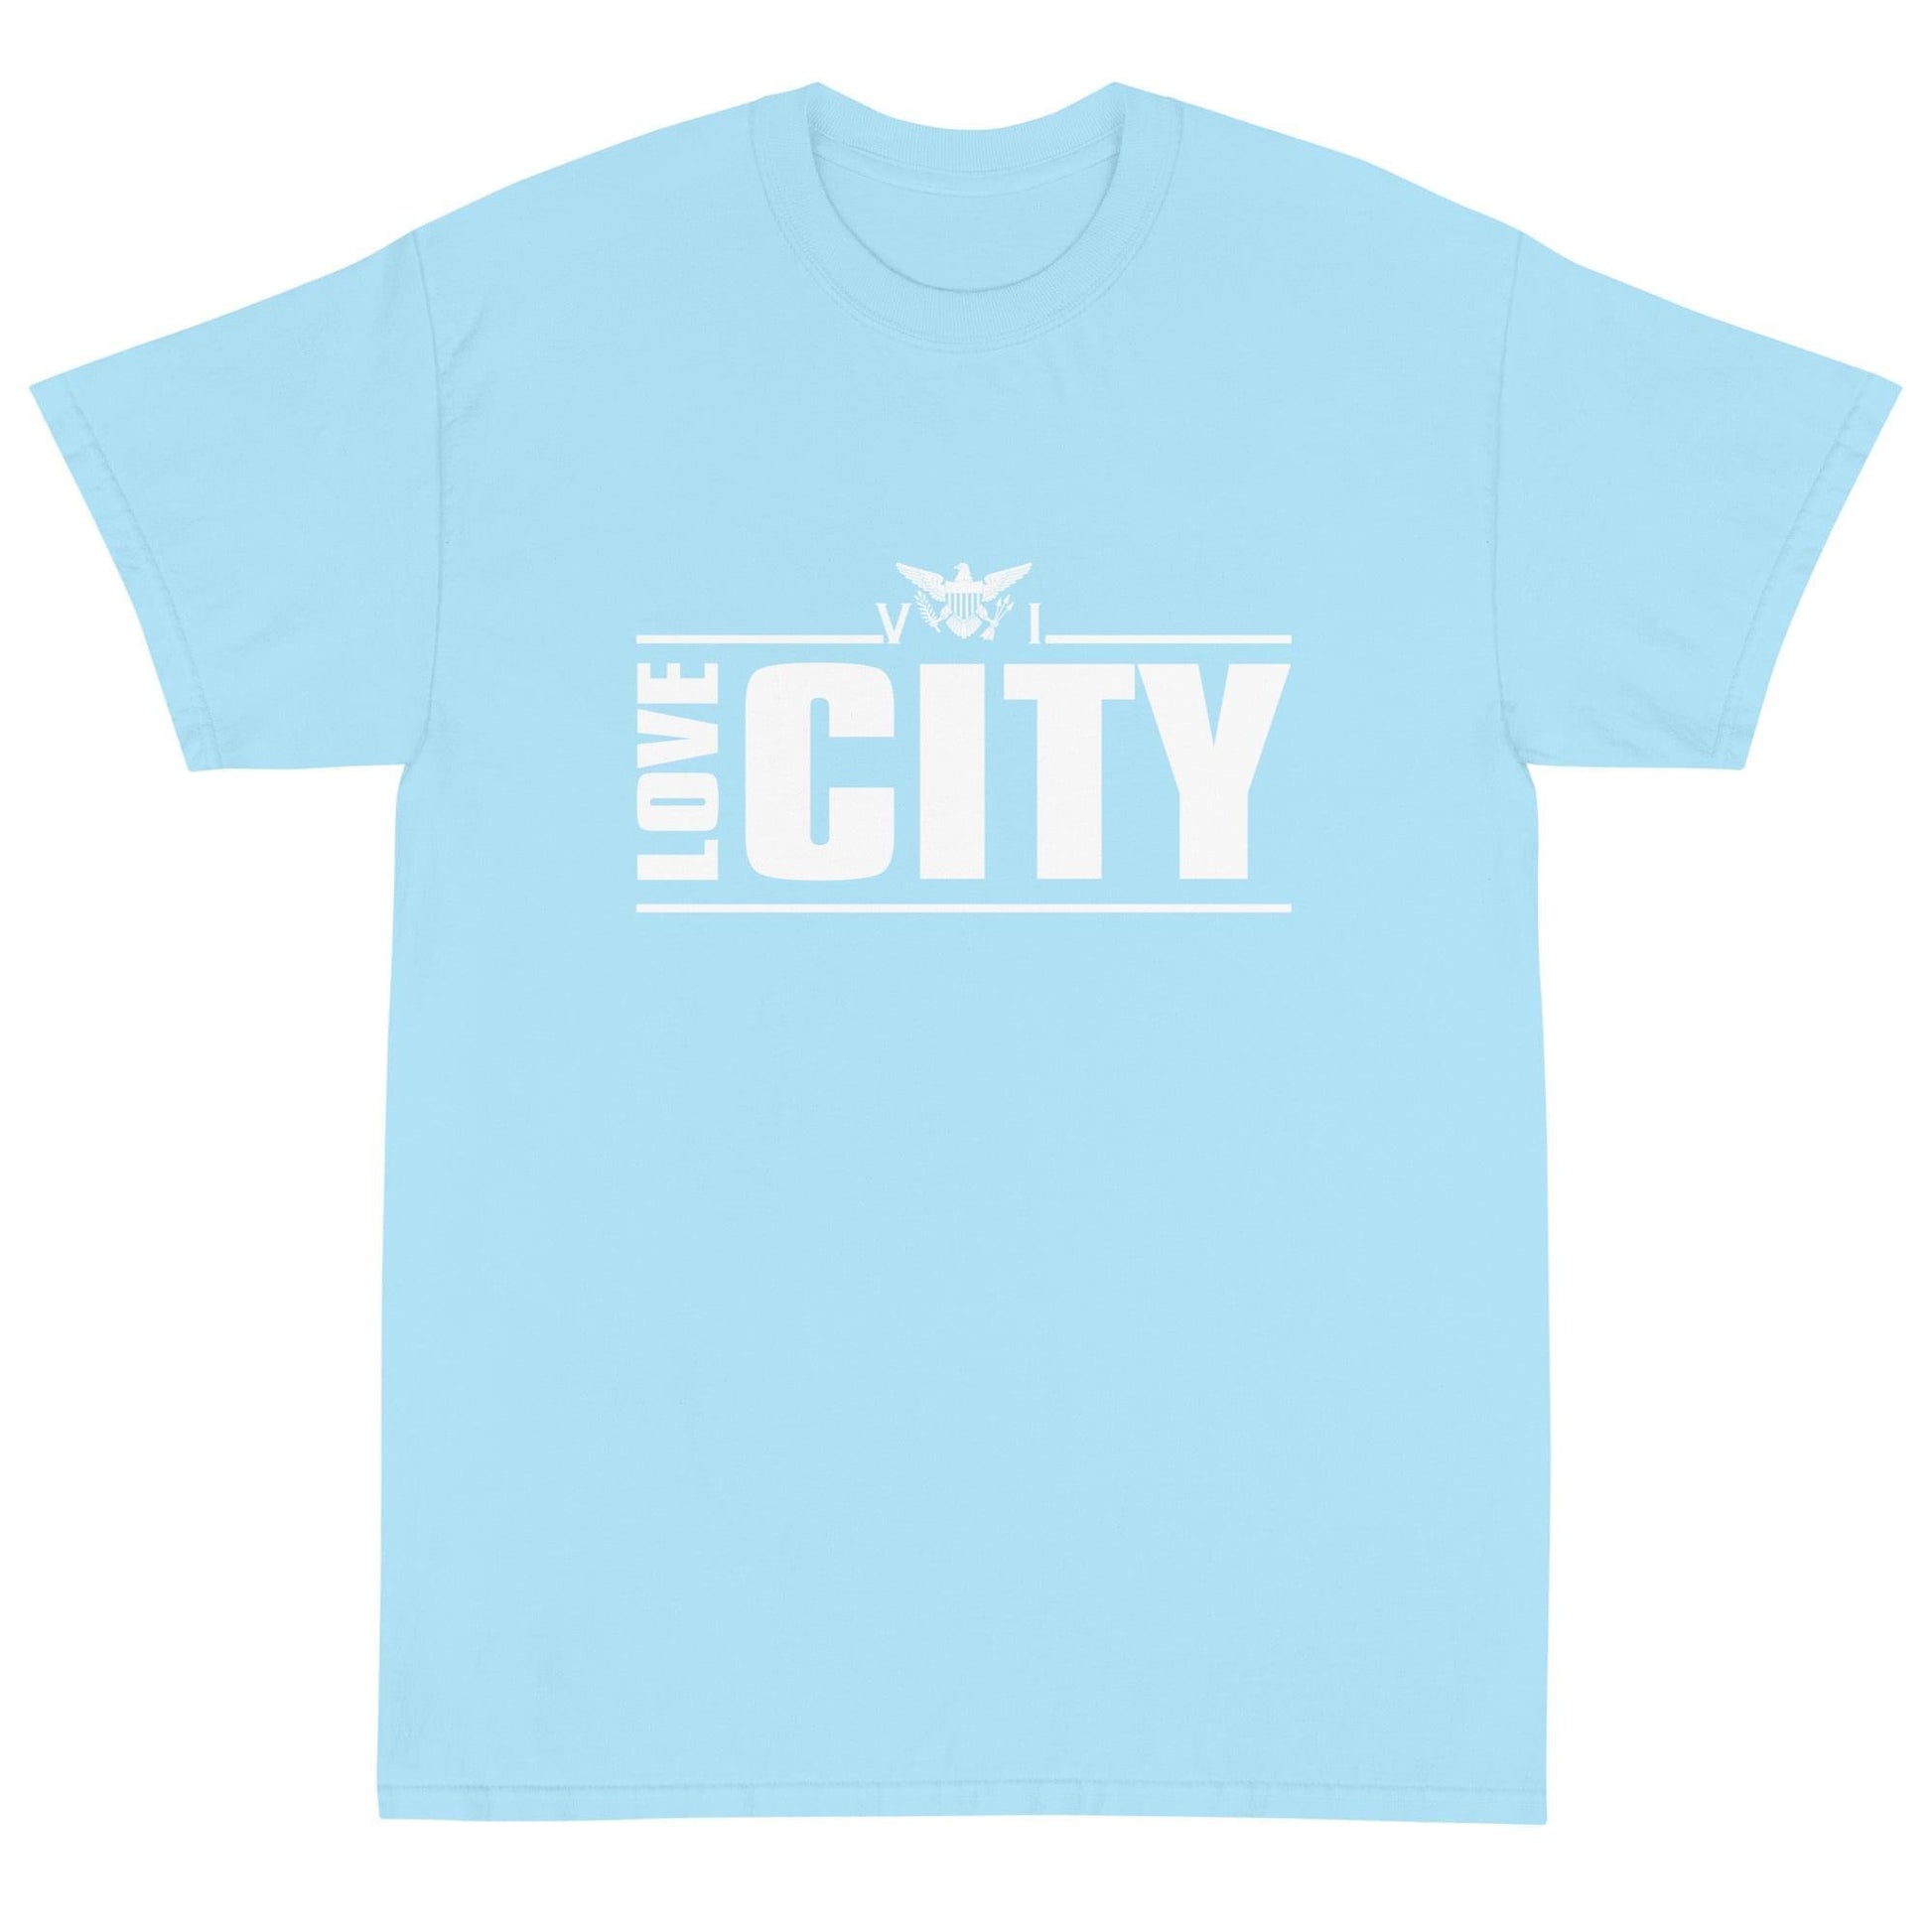 Love City T-Shirt | City T-Shirt | Phade Fashion Virgin Islands